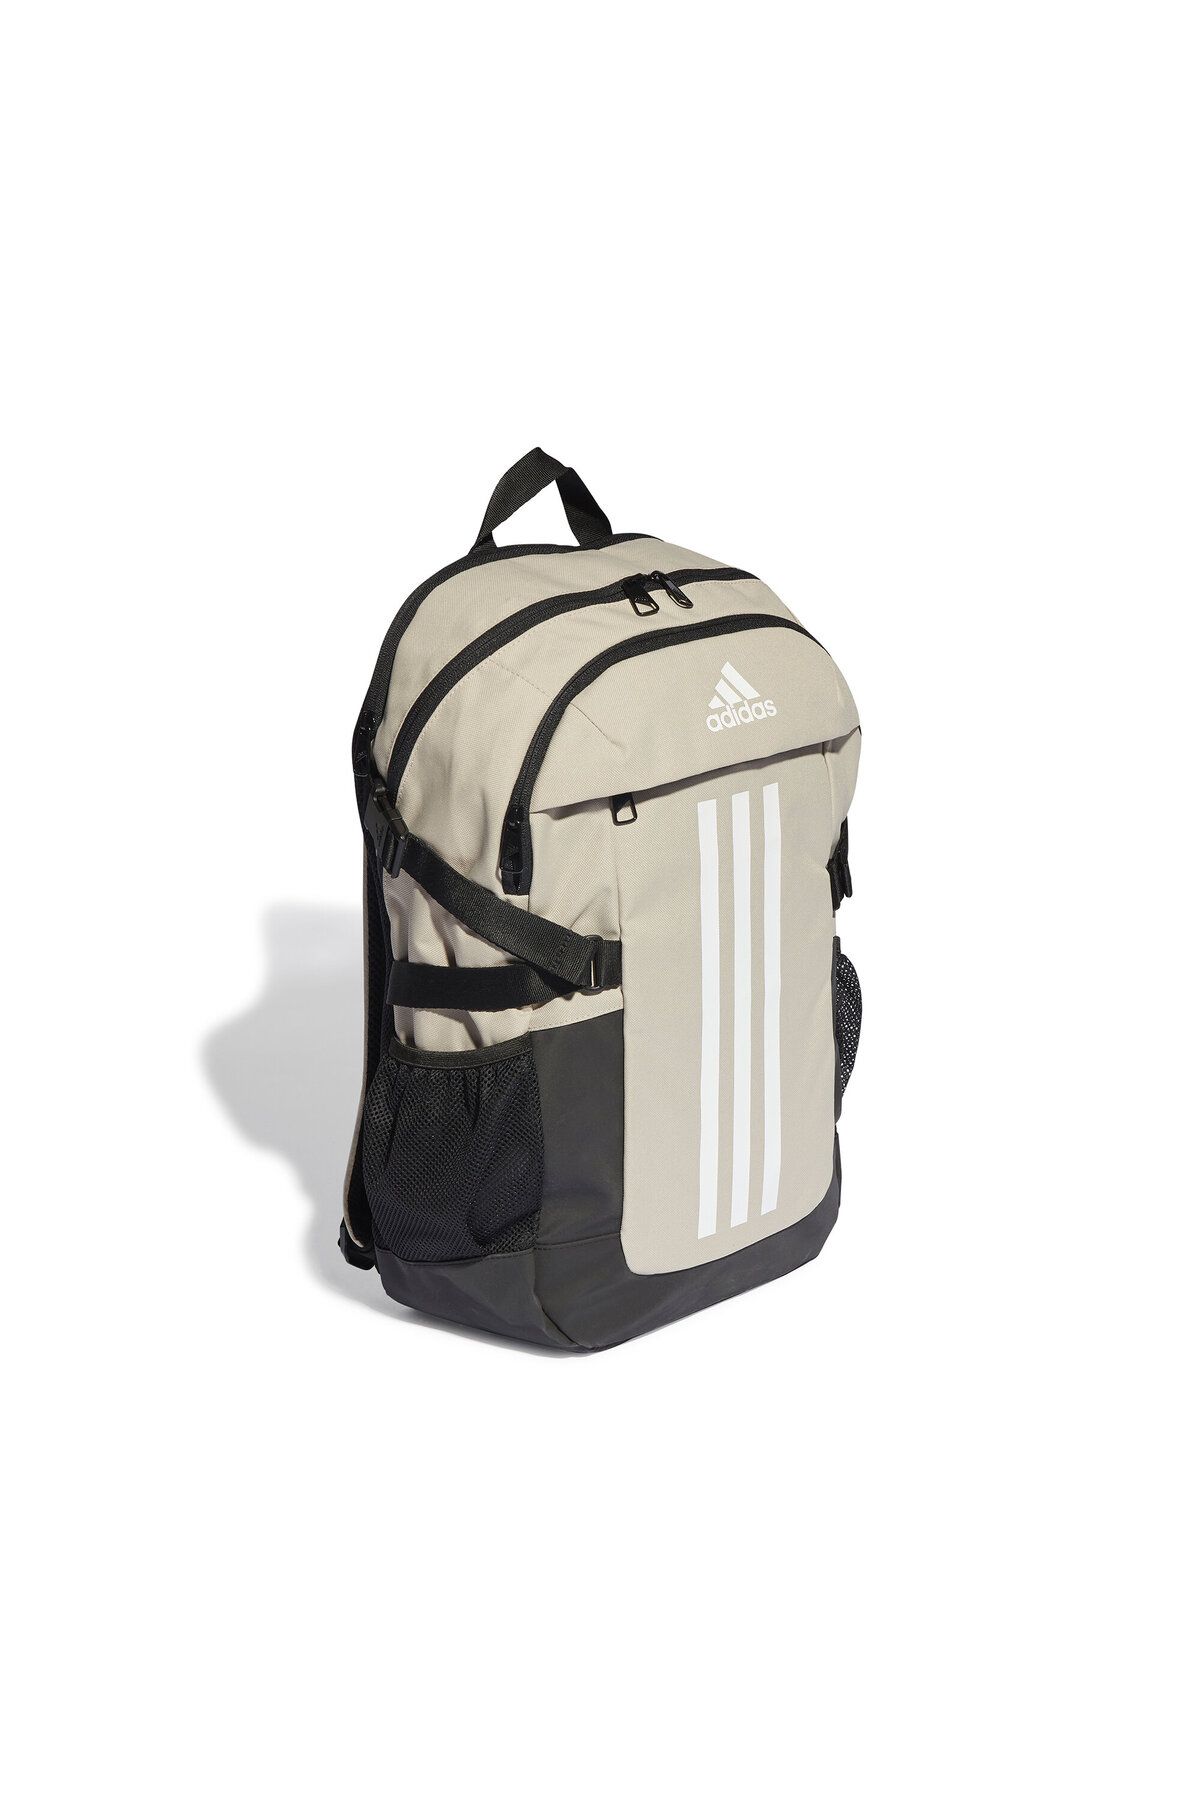 Sale Backpack Set for Girls High School Bag with Lunch Bag Laptop Backpack  with USB Charging Port - KKbags.com